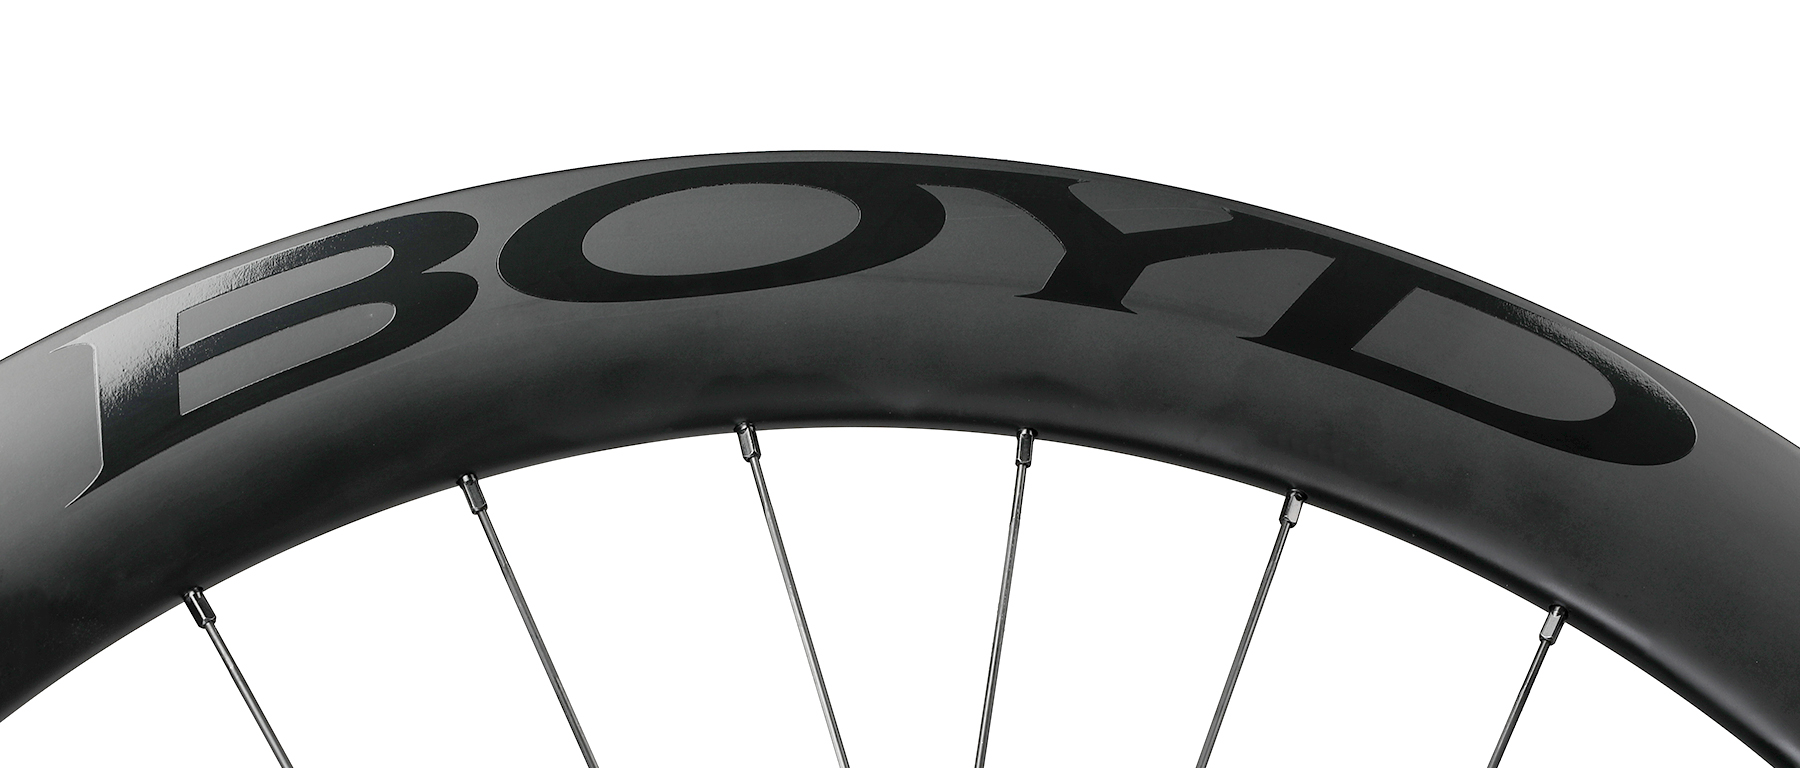 Boyd Cycling Podium 55mm Carbon Disc Wheelset